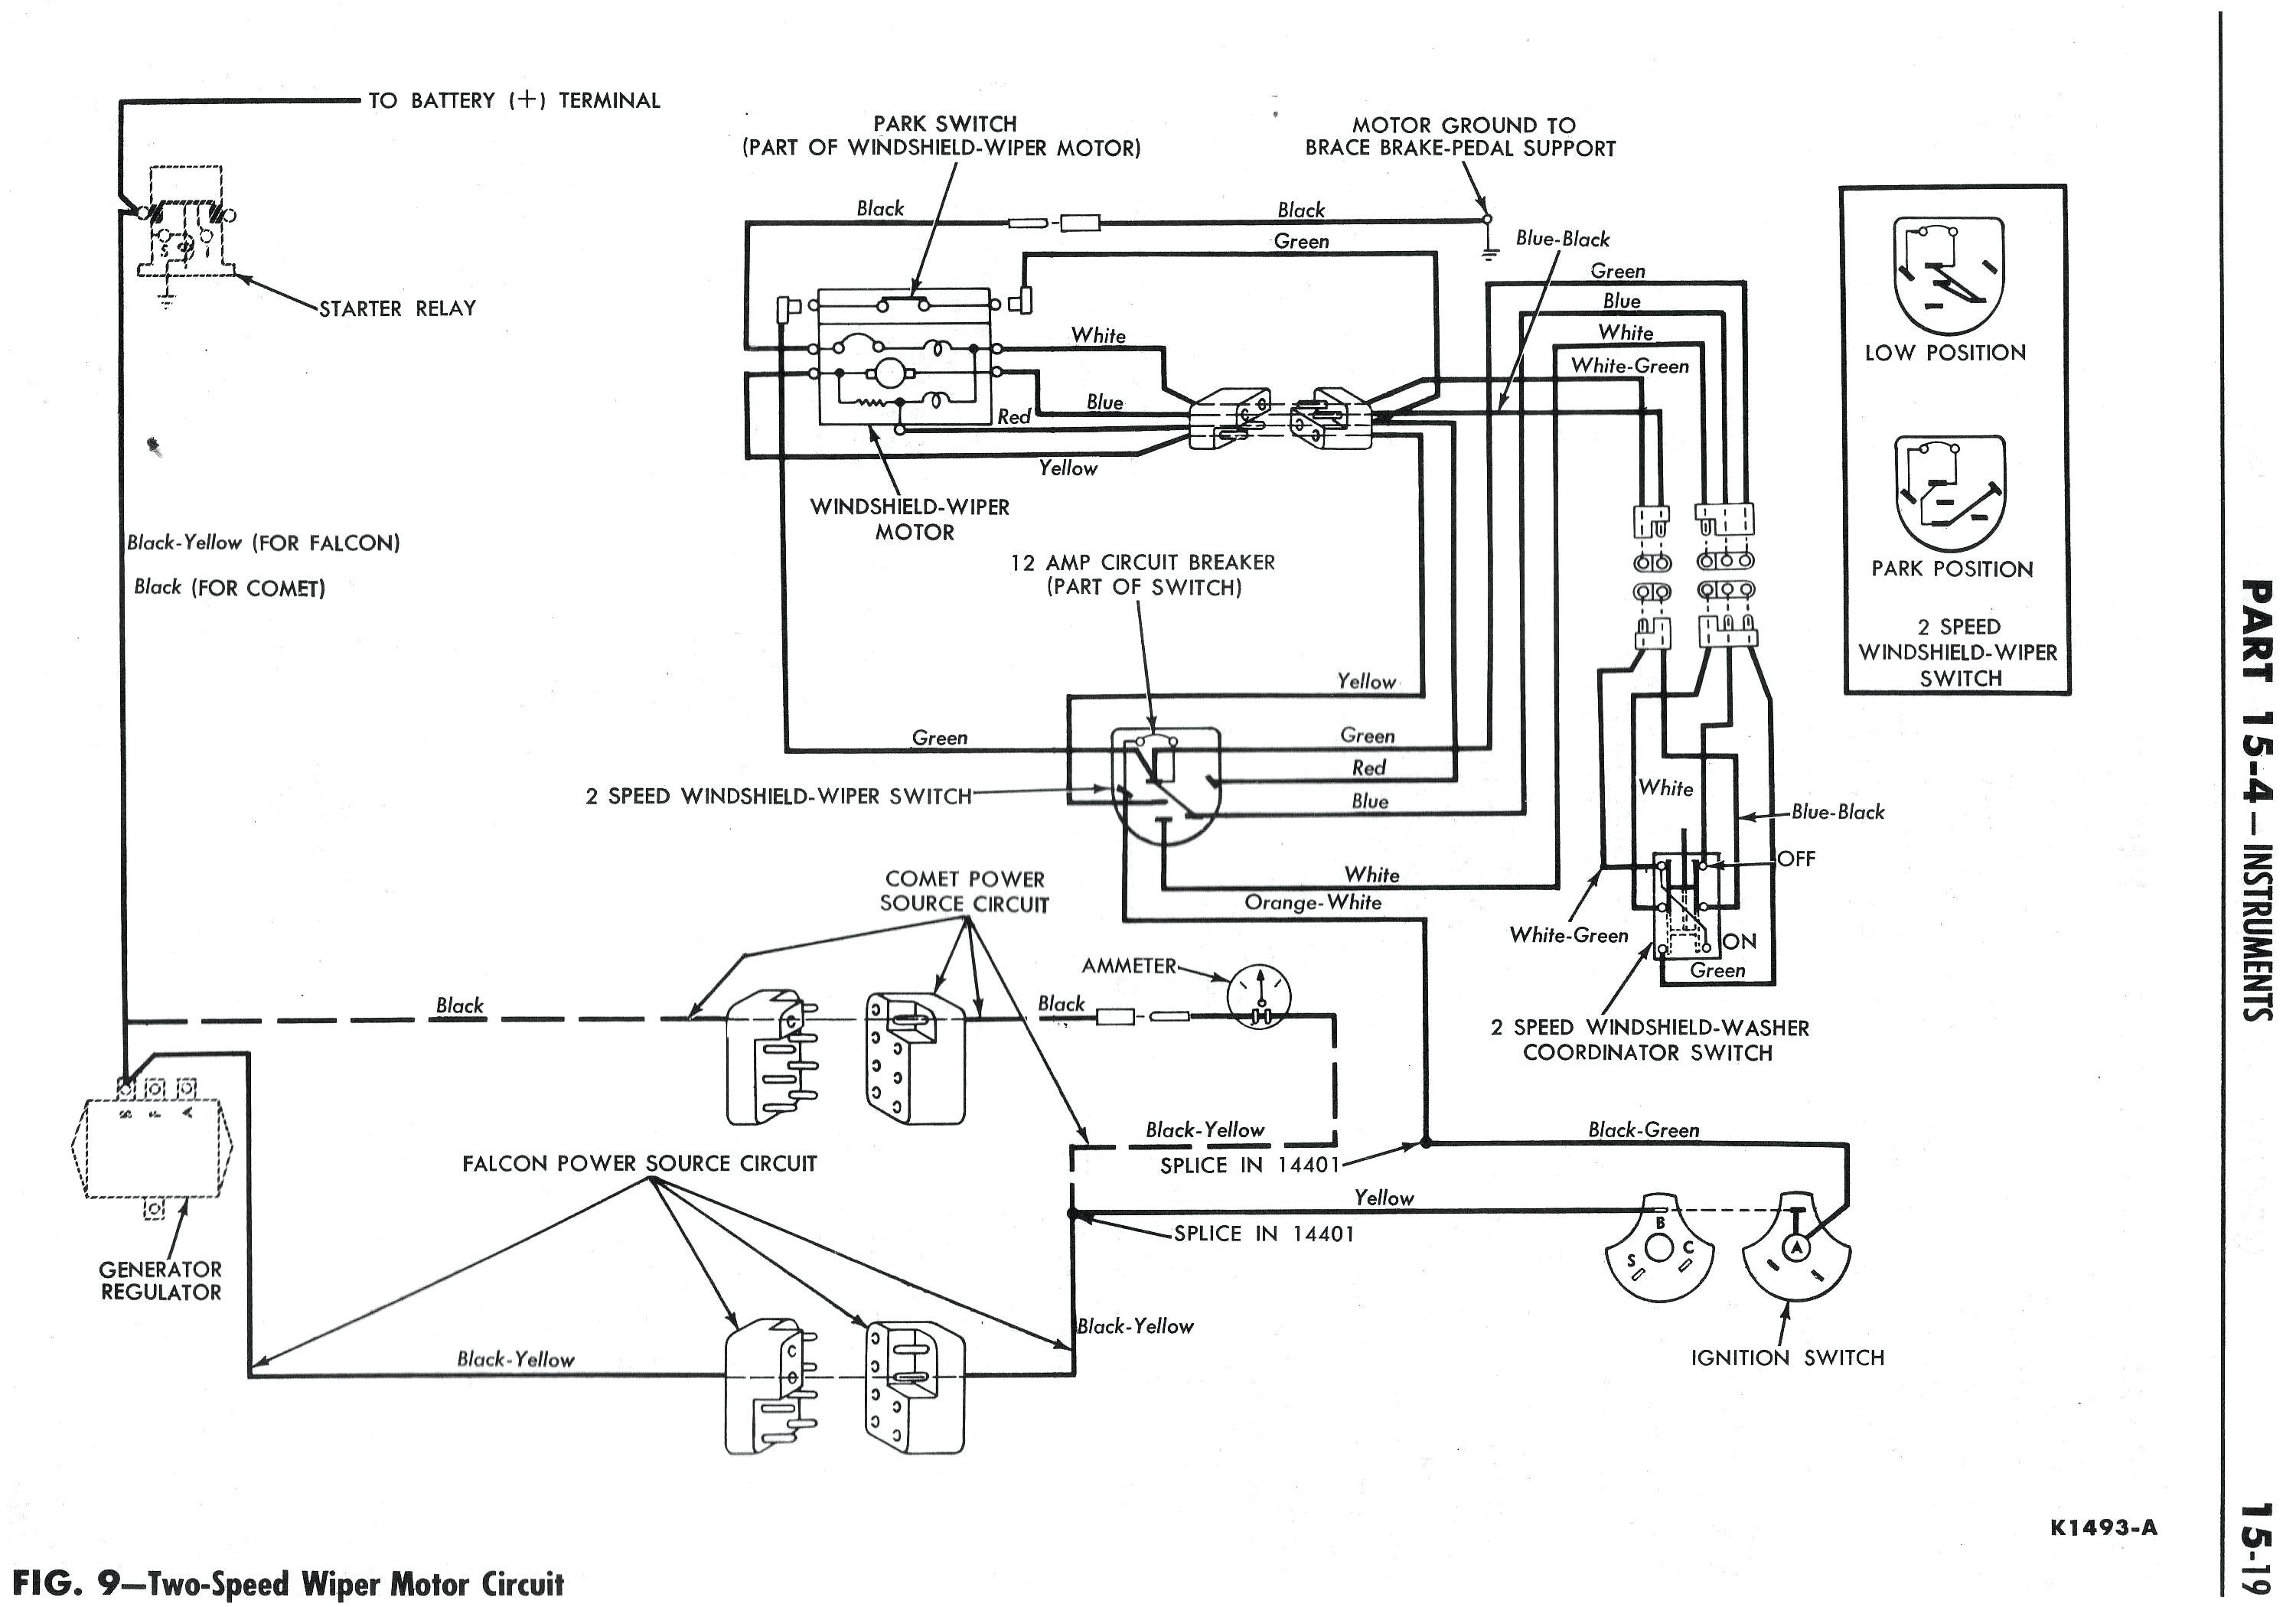 Kenwood Kdc 152 Stereo Wiring Diagram | Manual E-Books - Kenwood Kdc 152 Wiring Diagram